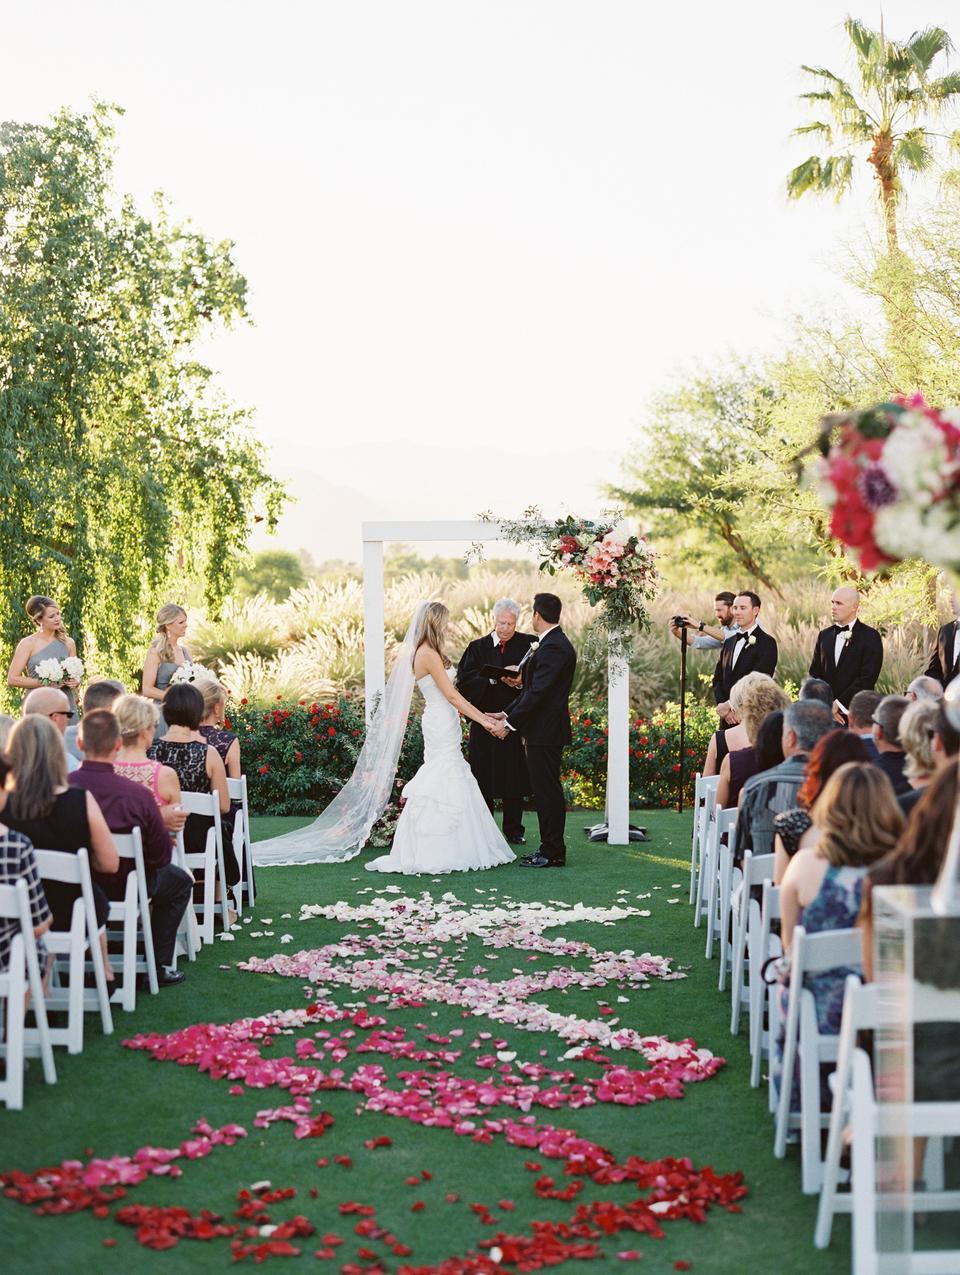 20 Outdoor Wedding Aisle Decor Ideas For Your Ceremony 